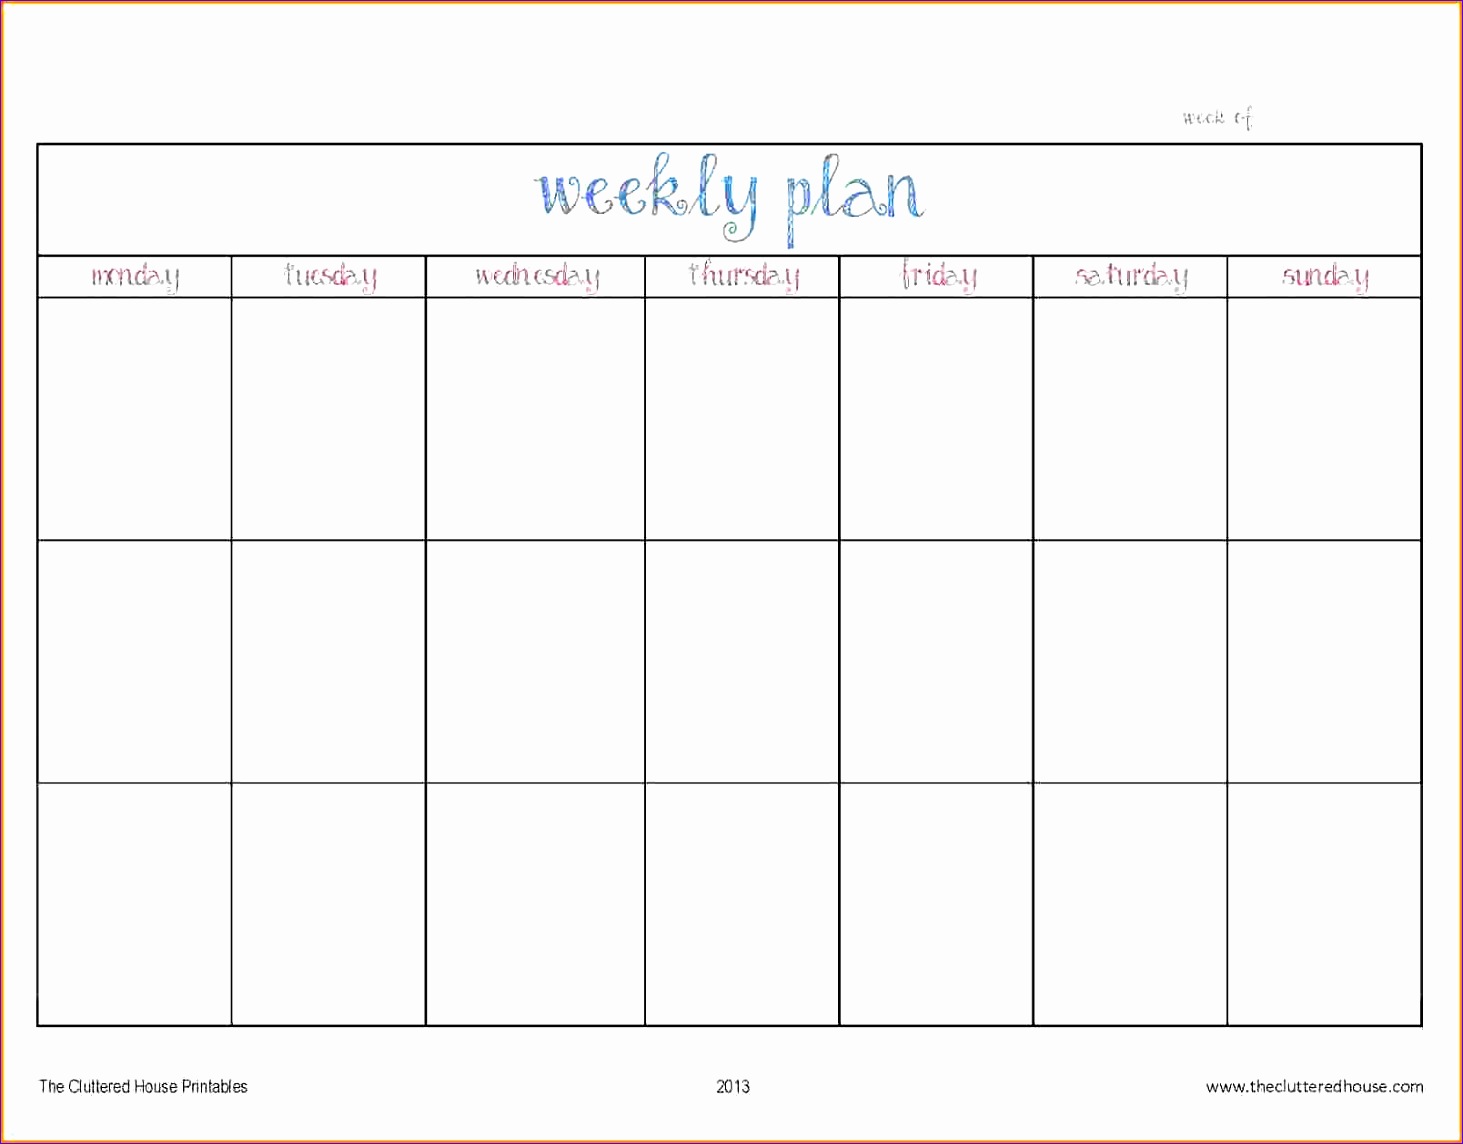 monthly employee schedule template 14631144